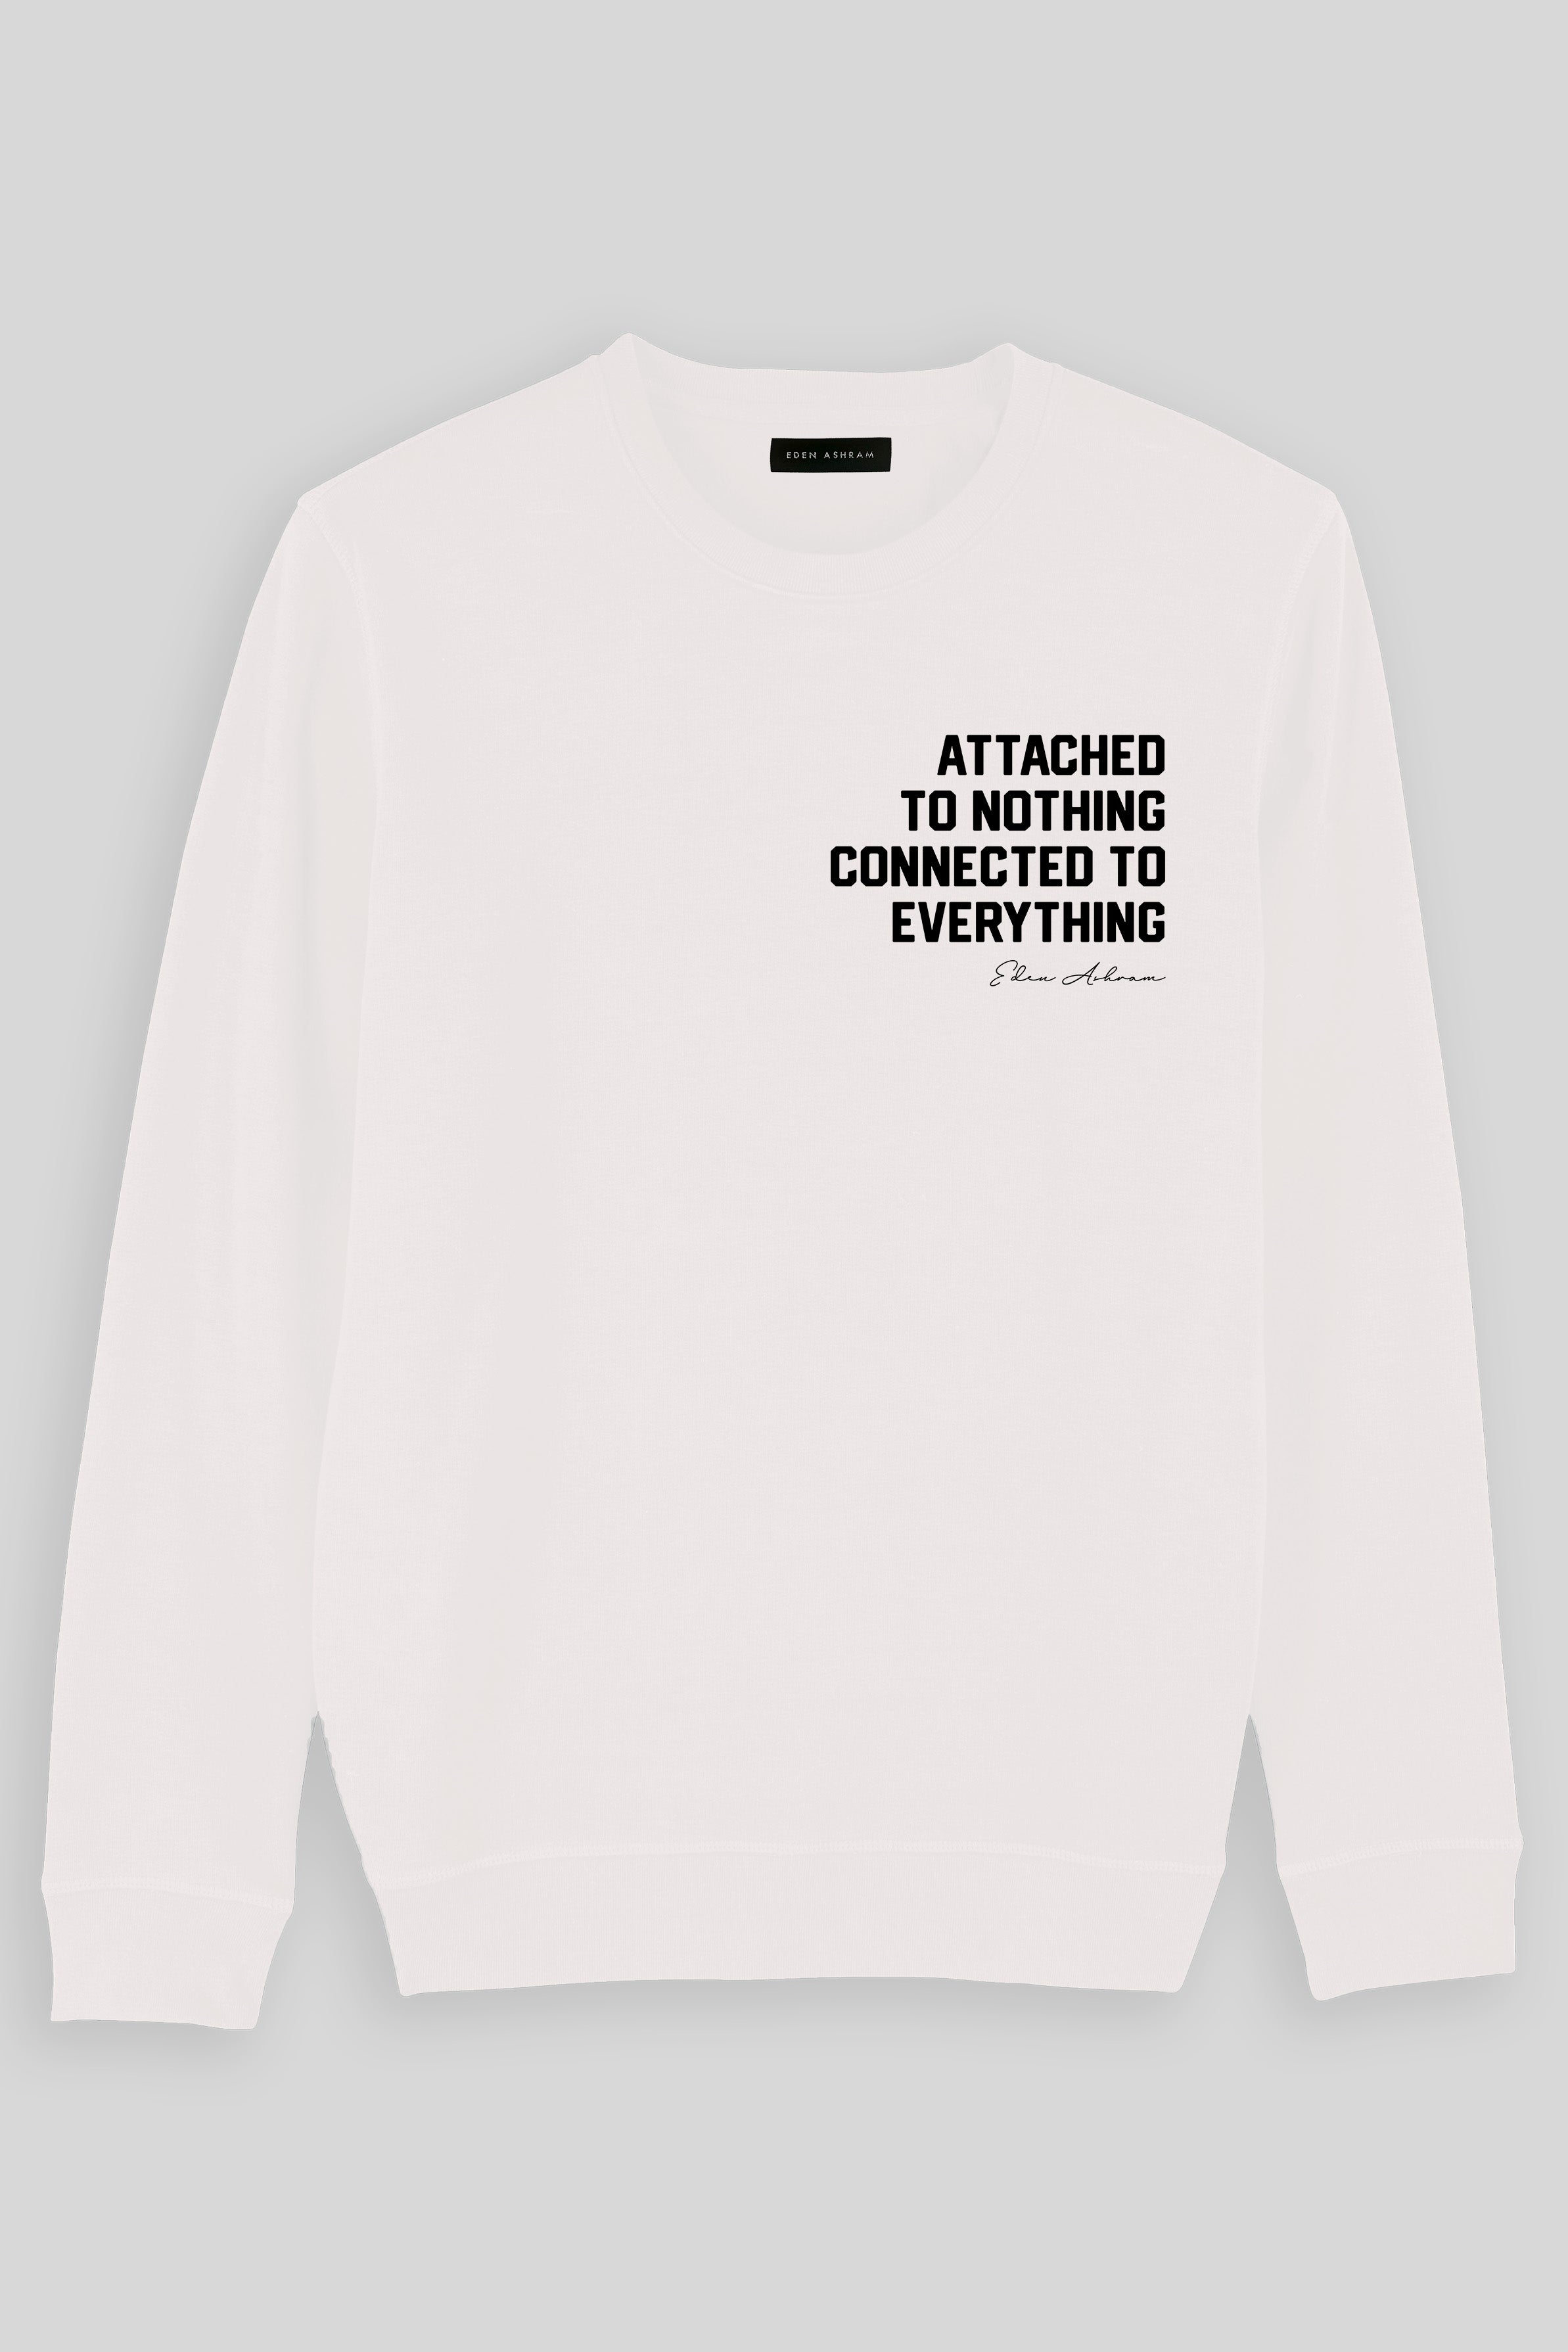 Eden Ashram Attached To Nothing Connected To Everything Premium Crew Neck Sweatshirt Vintage White